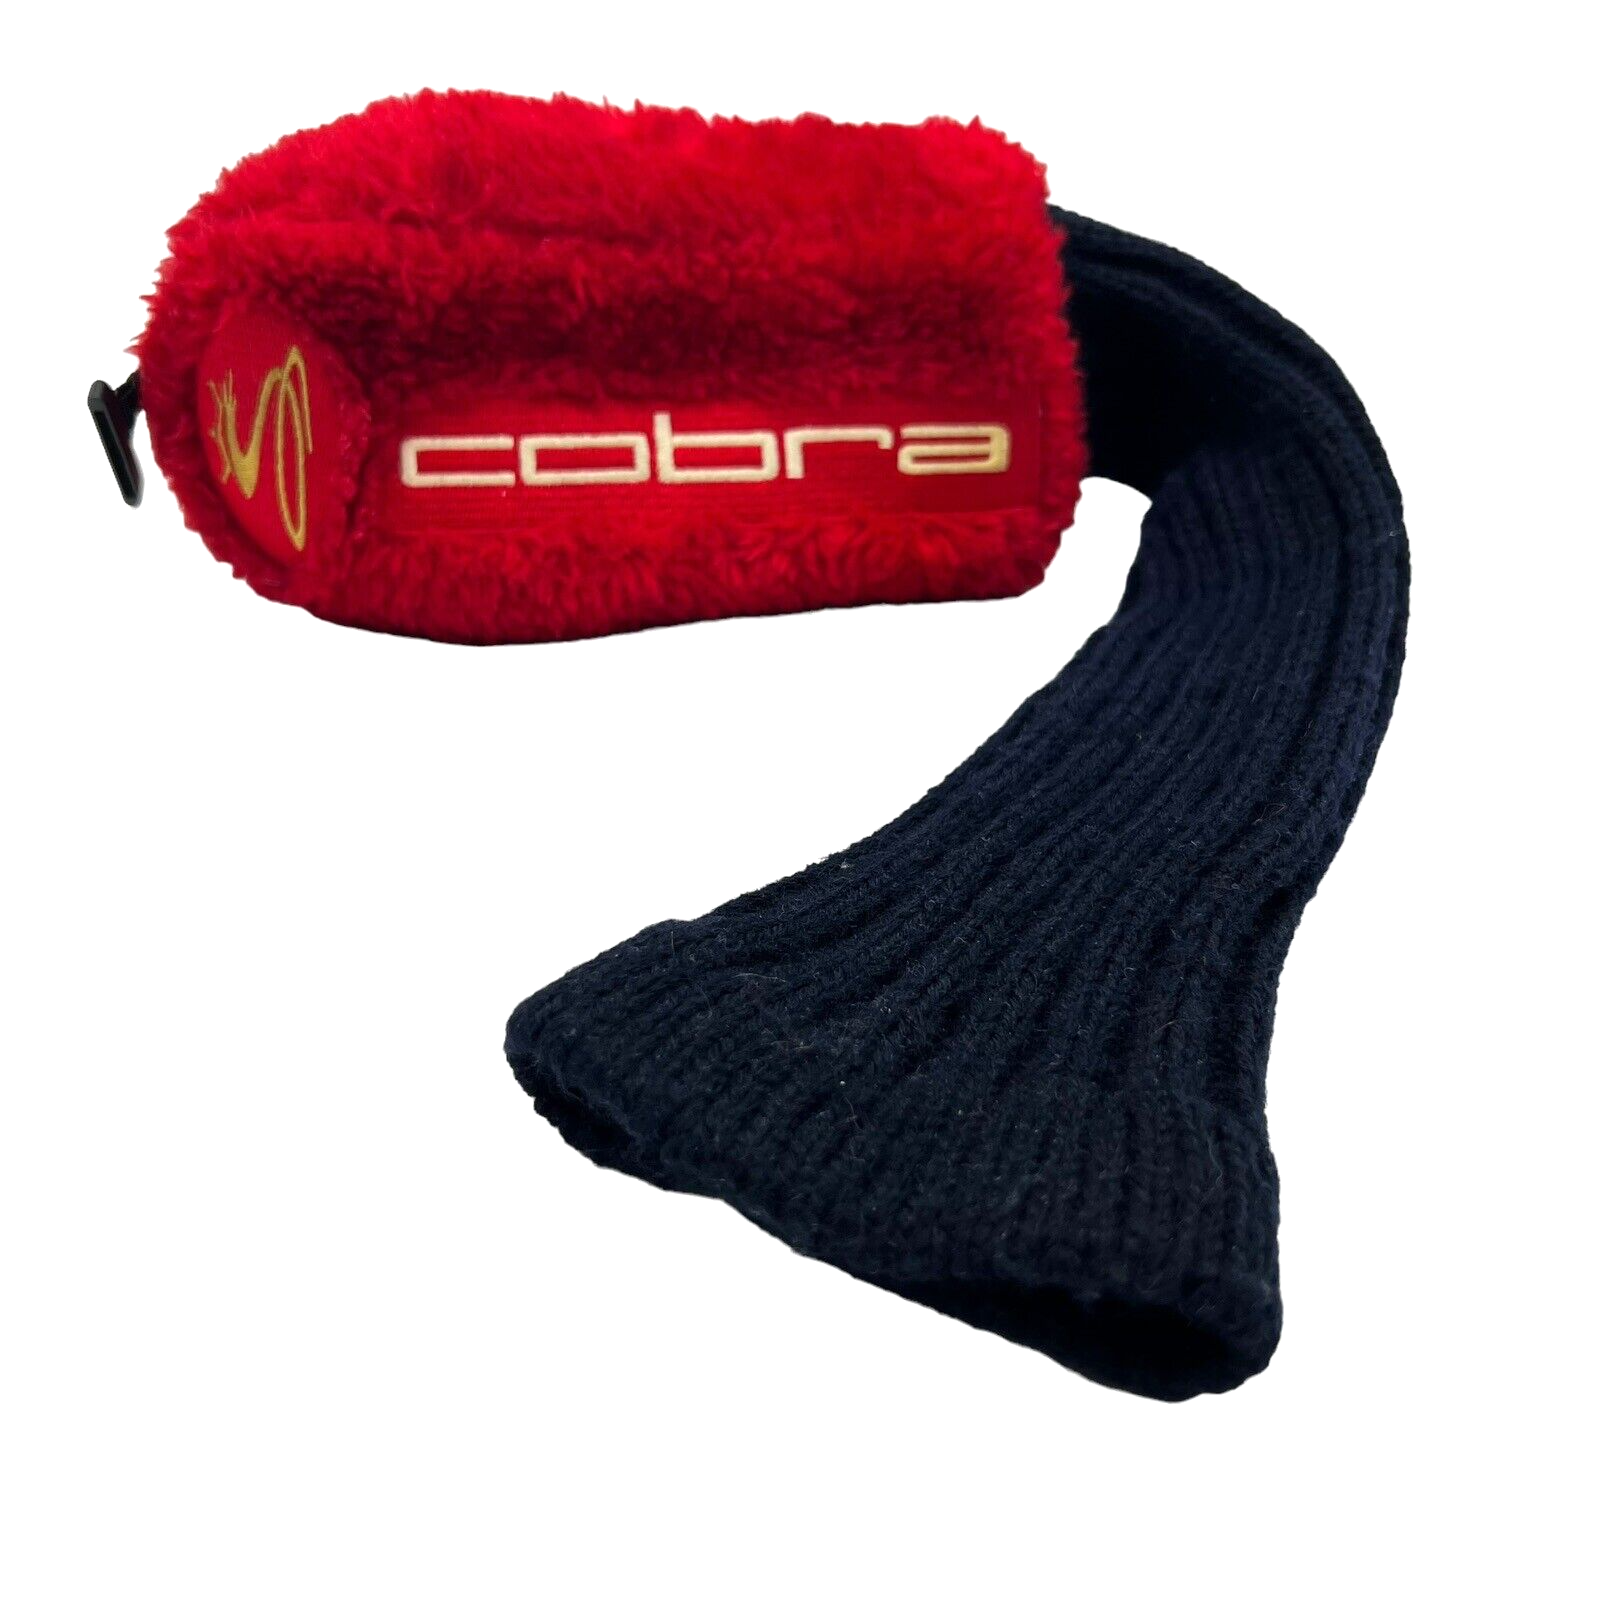 Cobra Golf Club Head Wood Cover Red With Black No Tag - $10.36